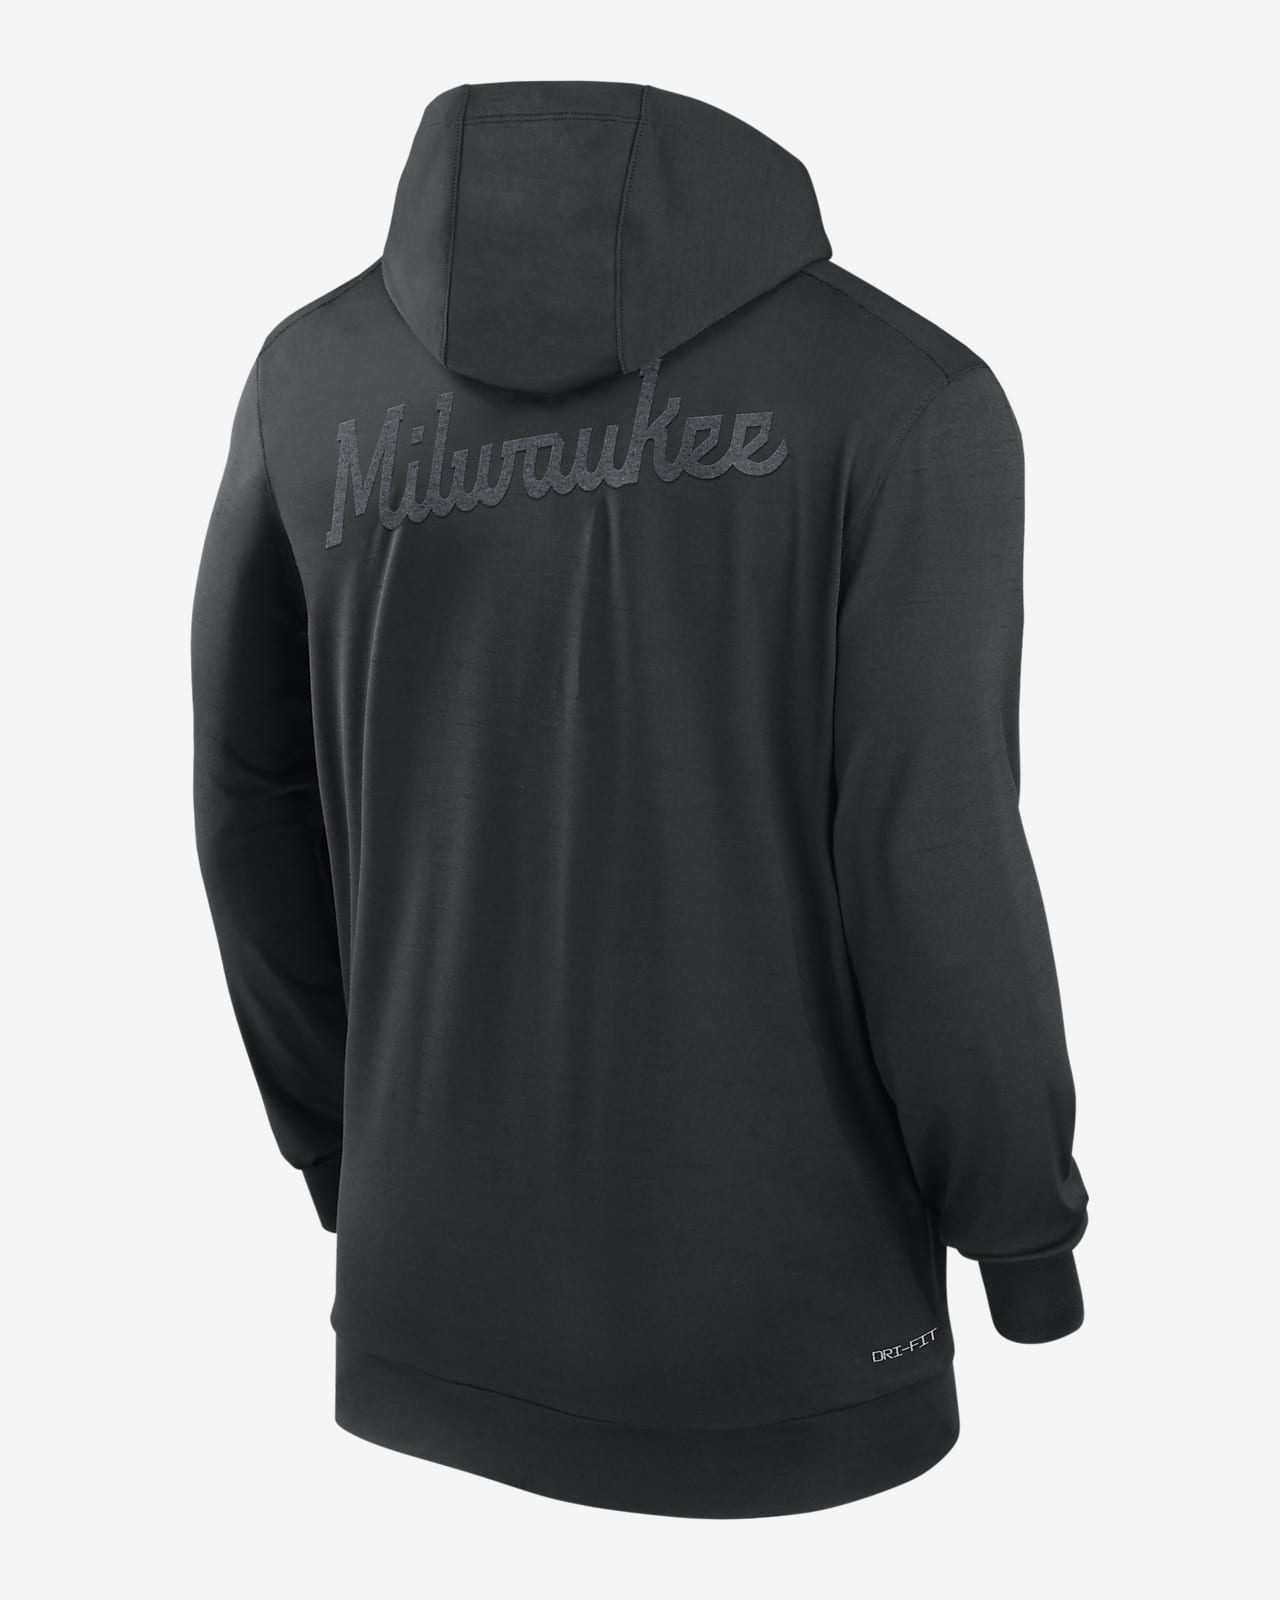 Nike Dri-FIT Travel (MLB Milwaukee Brewers) Men's Full-Zip Hoodie.